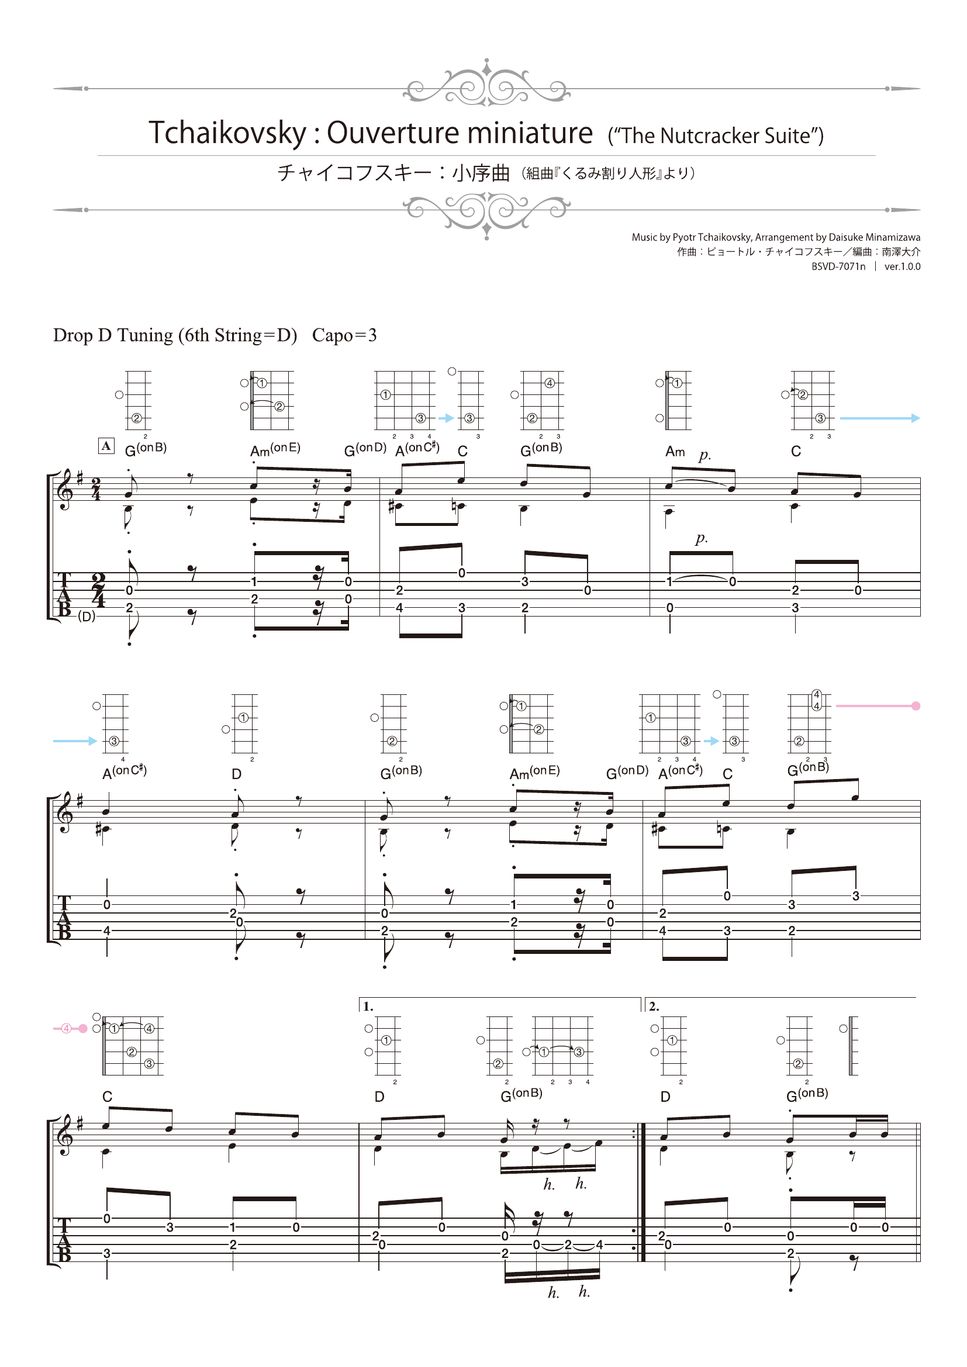 Tchaikovsky - Ouverture miniature (“The Nutcracker Suite”) (Solo Guitar) by Daisuke Minamizawa